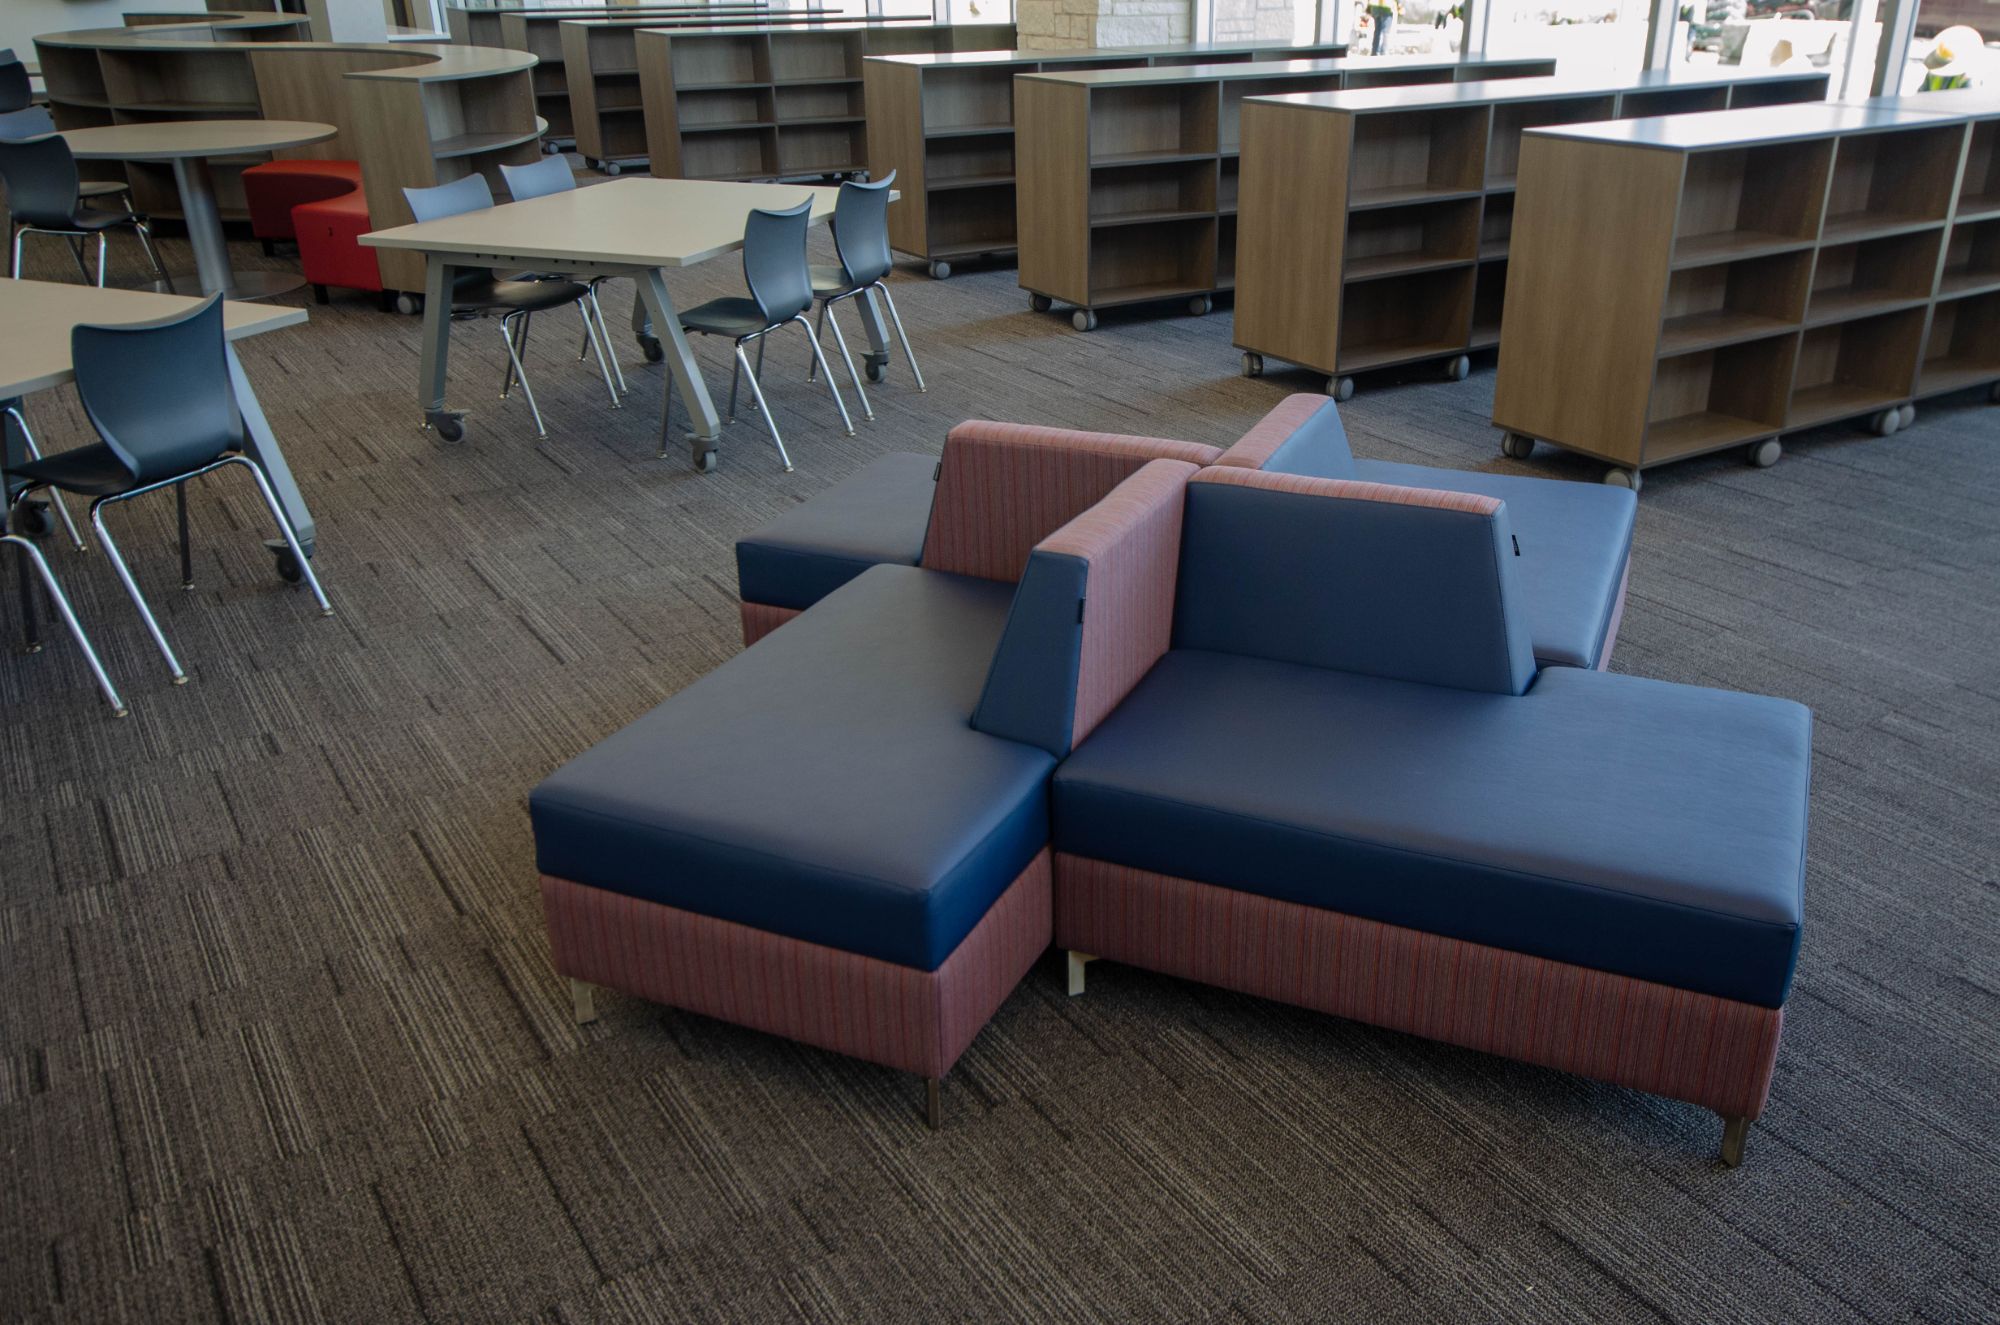 Lone Star Furnishings - Texas School Furniture - DSC 0461